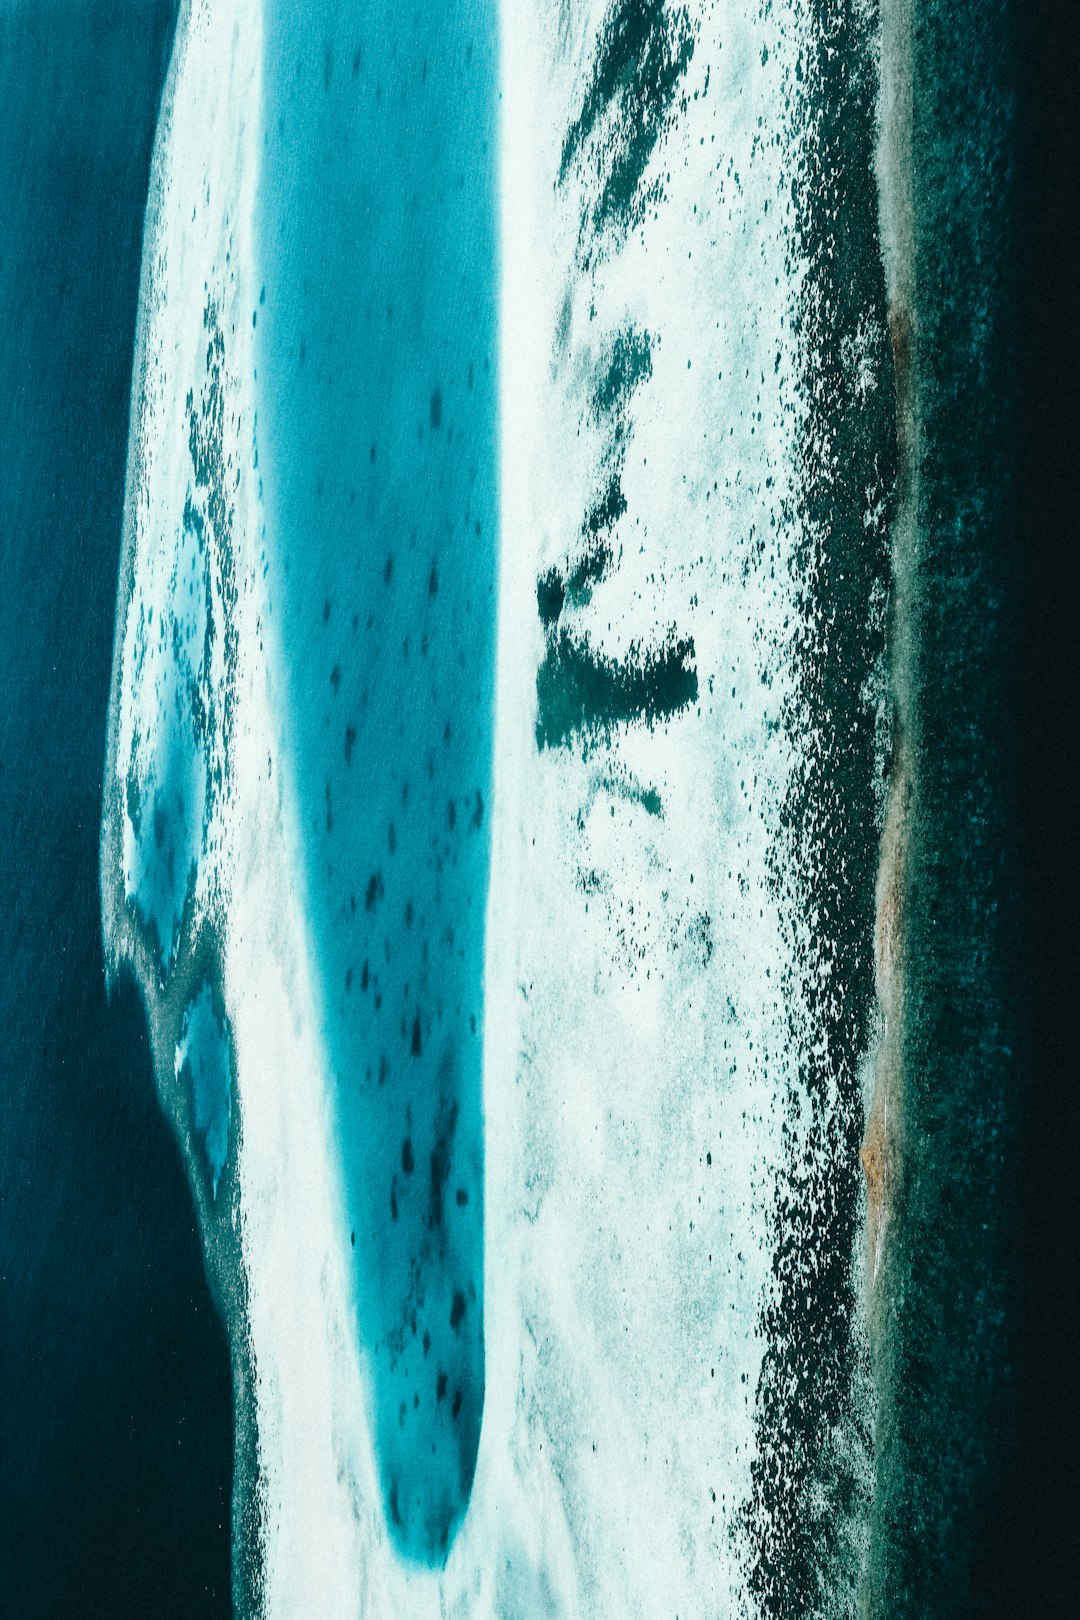 Underwater photo spot Maldives Felidhoo